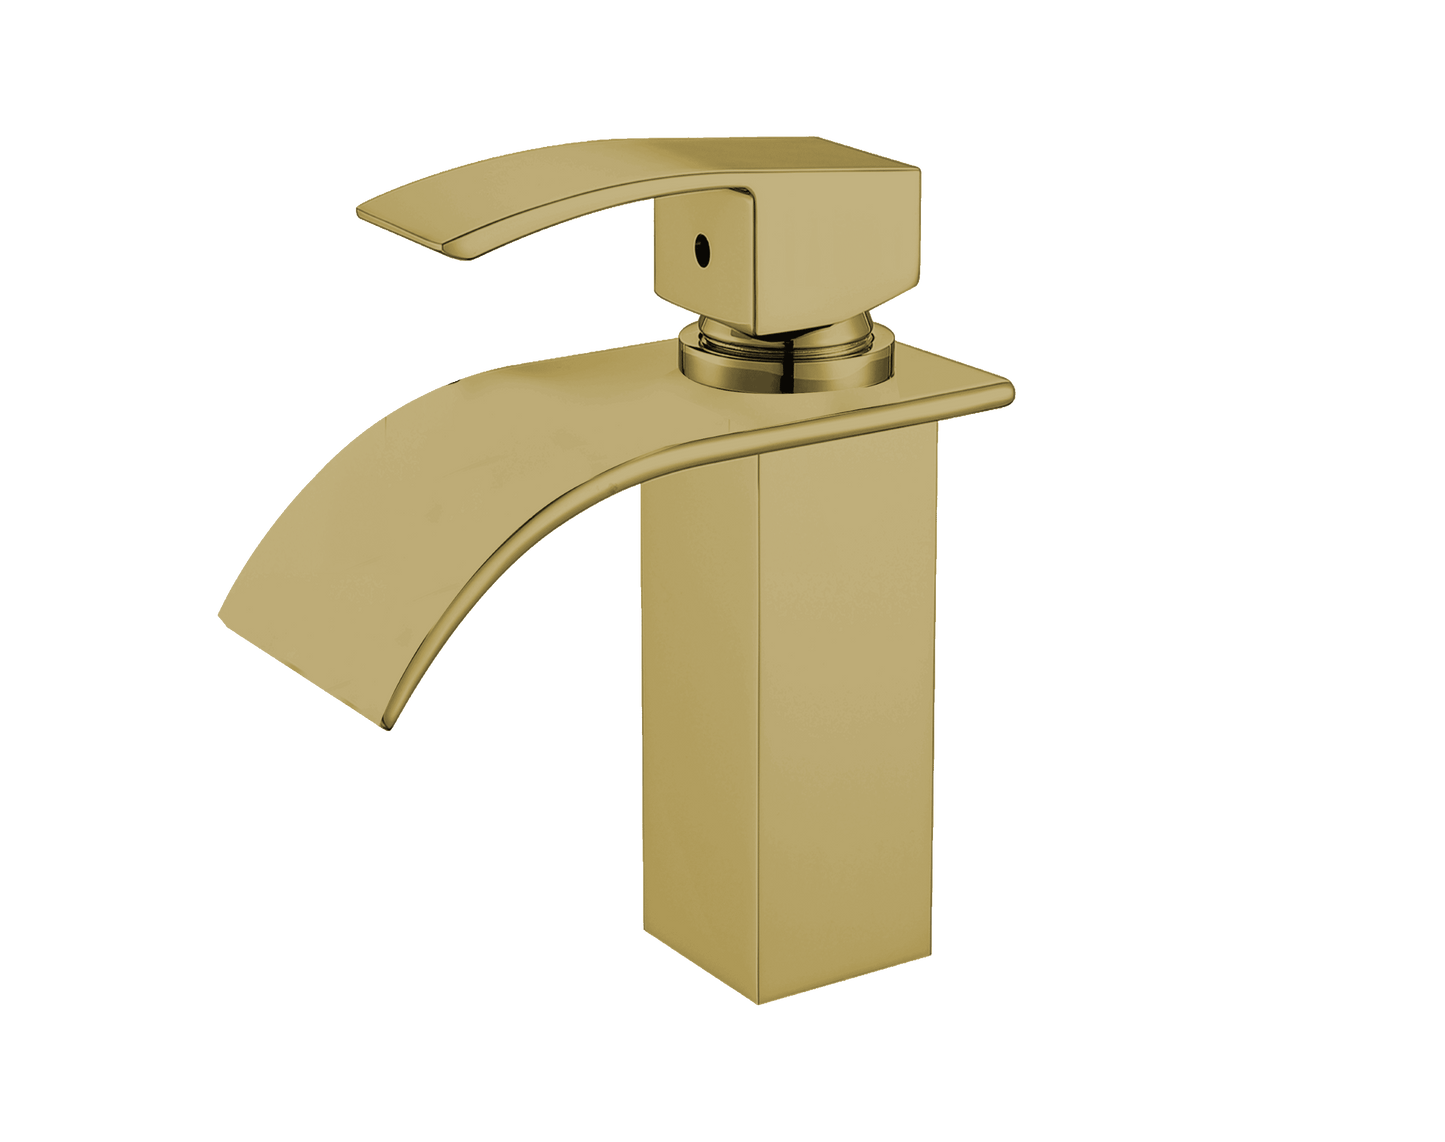 MJAS5104 - Waterfall Single Hole Bathroom Faucet